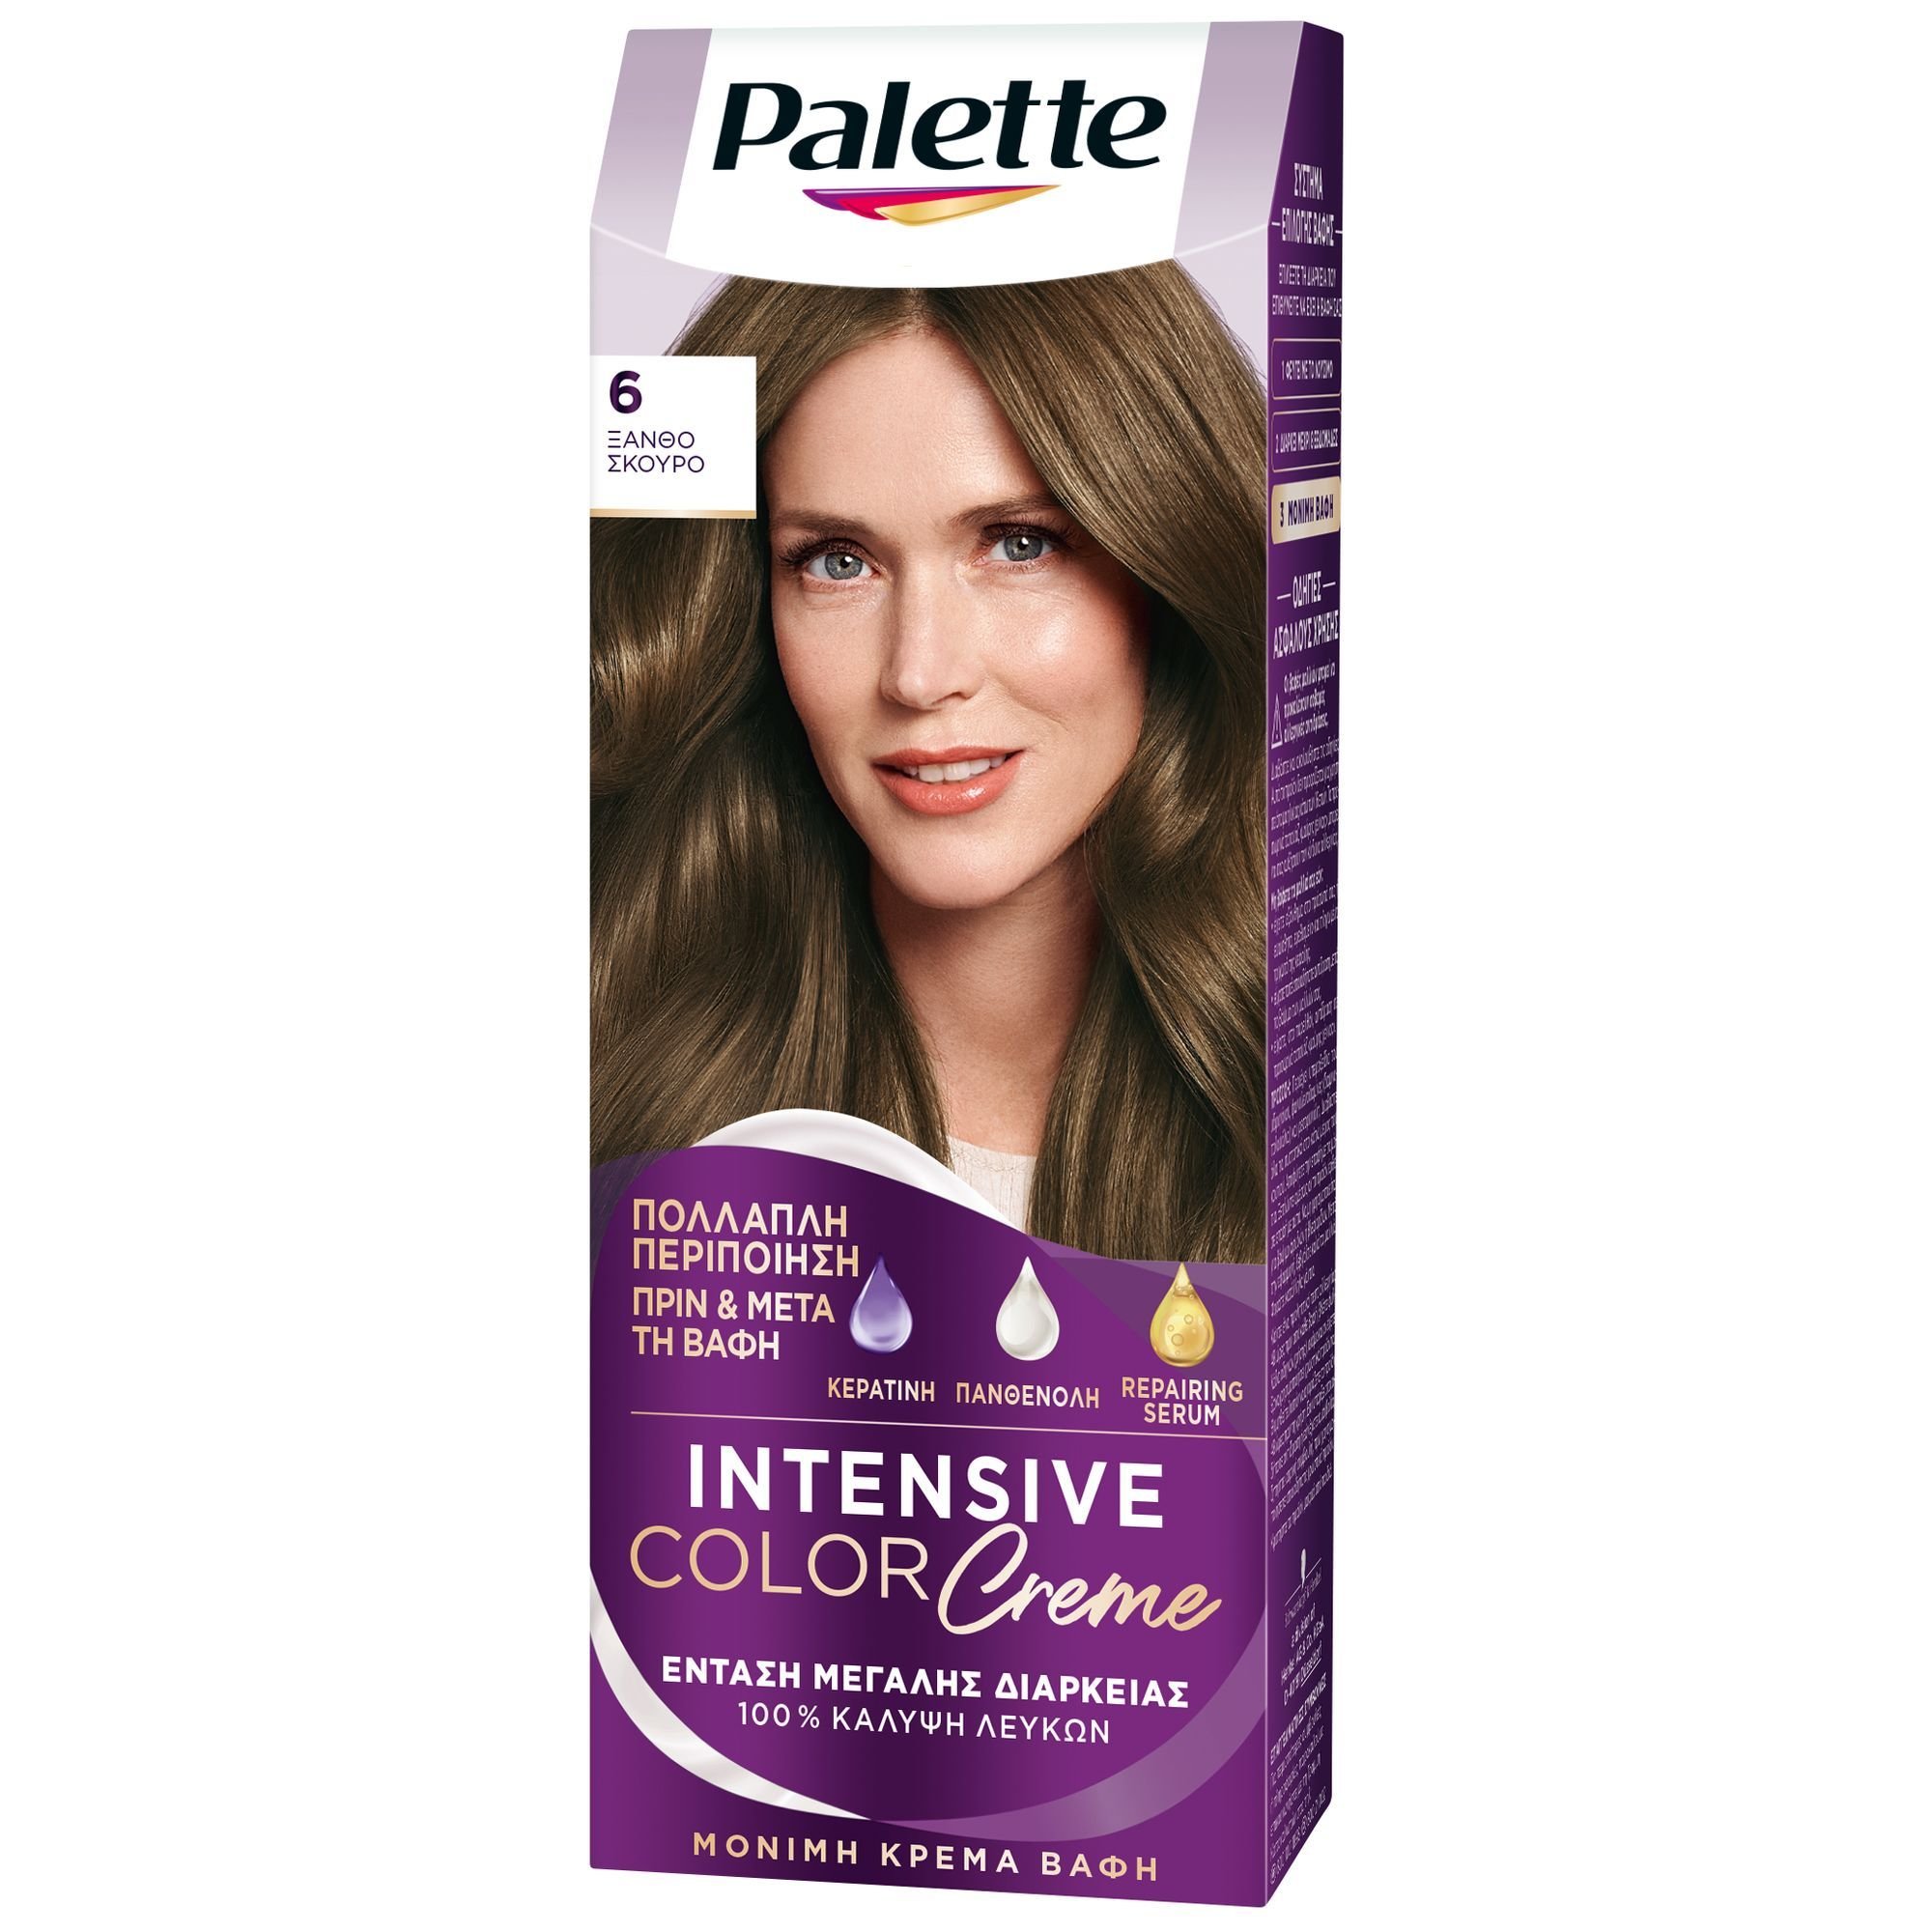 Schwarzkopf Palette Intensive Hair Color Creme Kit Μόνιμη Κρέμα Βαφή Μαλλιών για Έντονο Χρώμα Μεγάλης Διάρκειας & Περιποίηση 1 Τεμάχιο – 6 Ξανθό Σκούρο